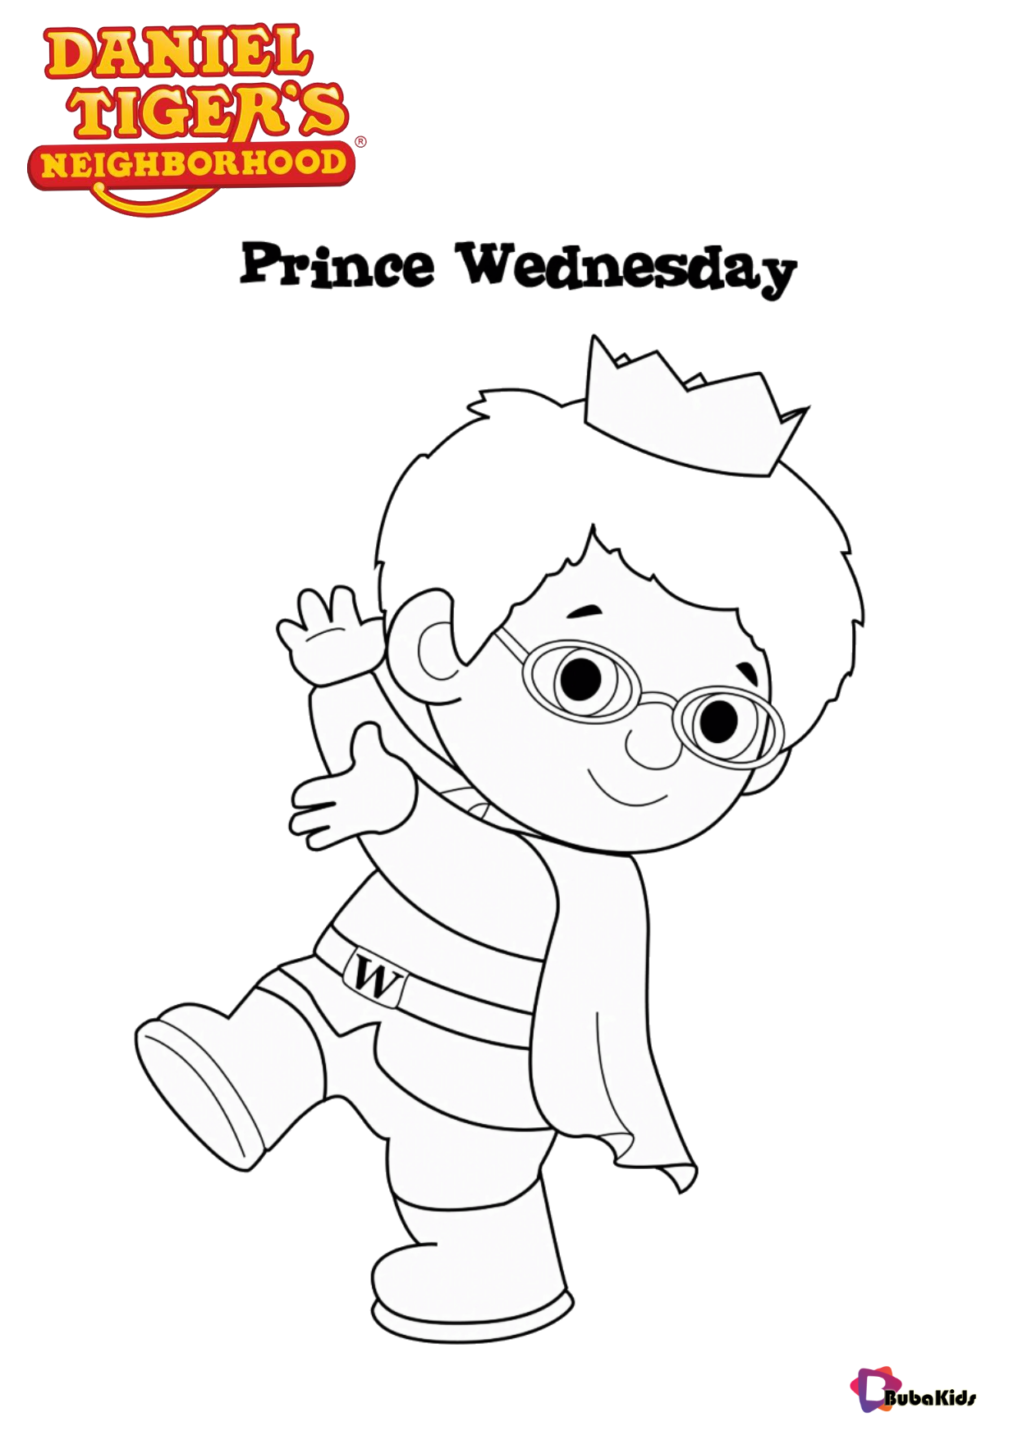 Prince Wednesday coloring page tv serial Daniel Tiger Neighborhood